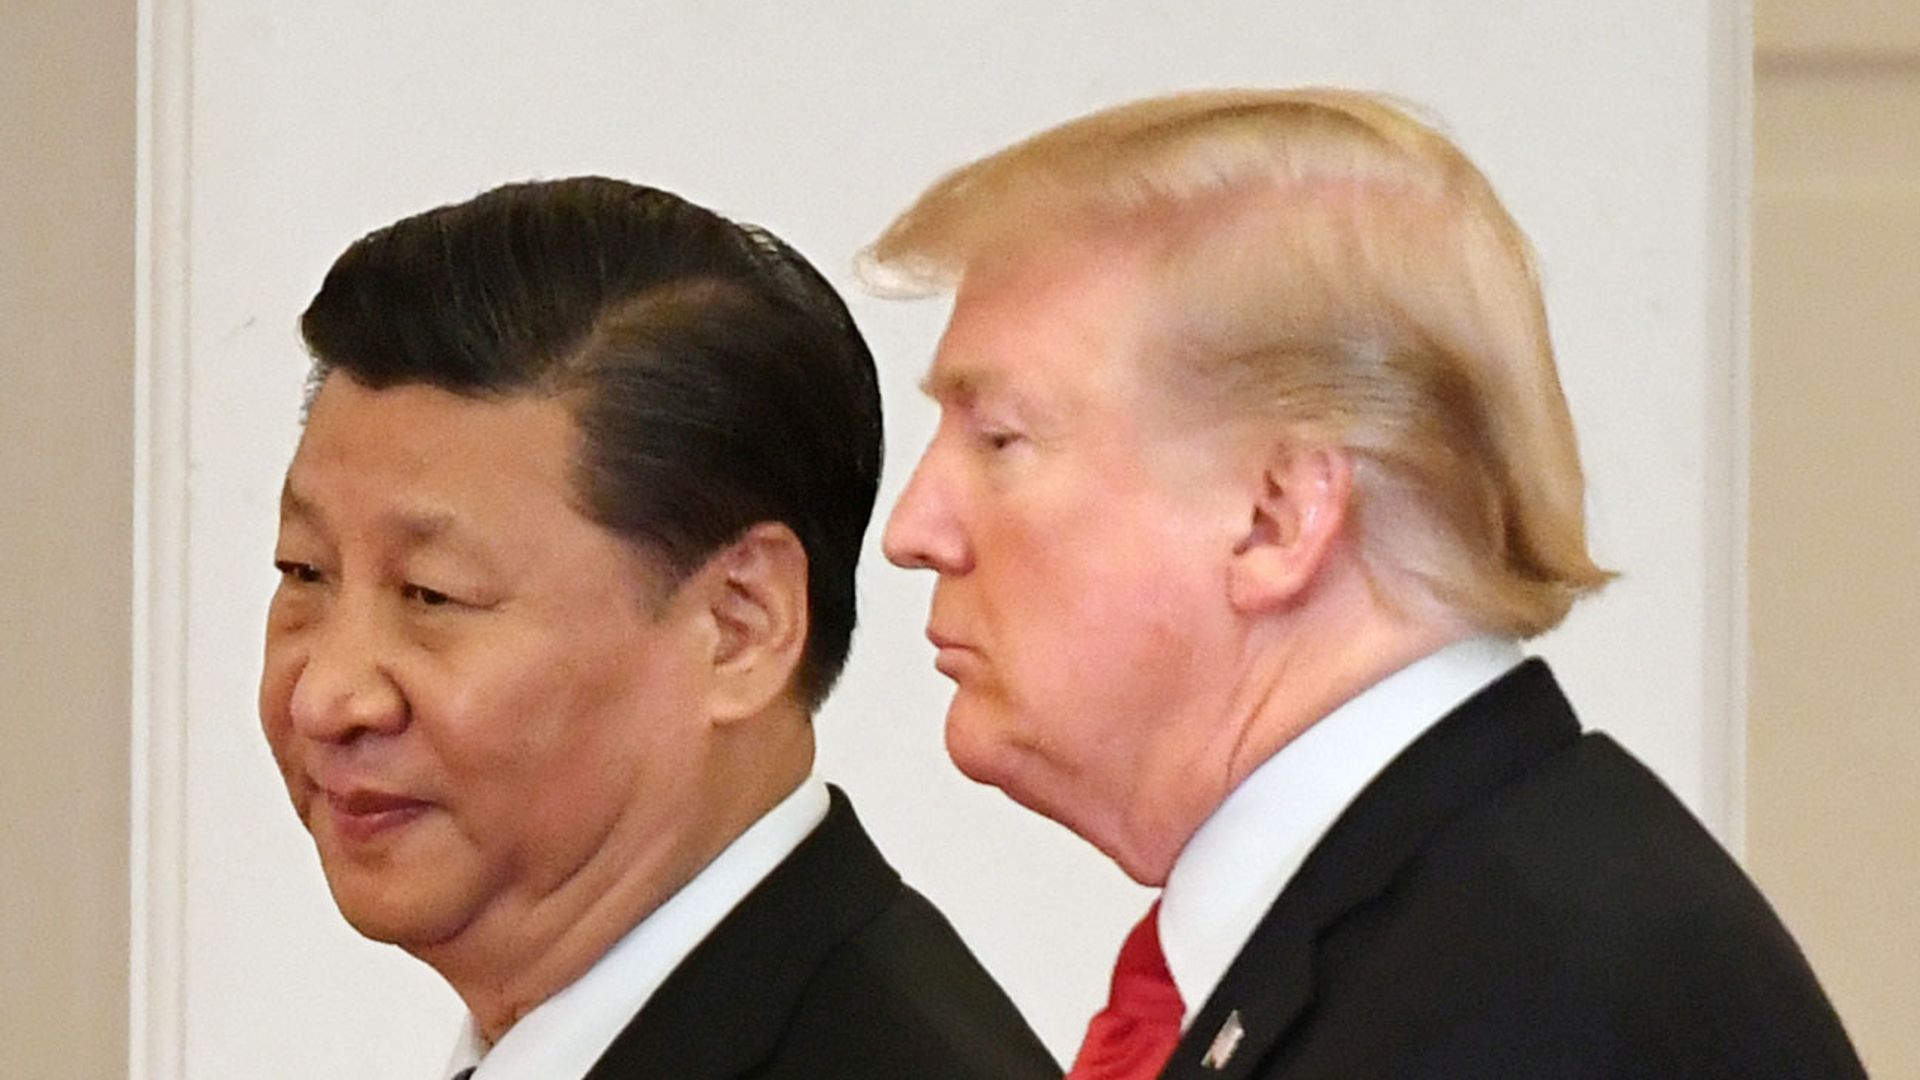 Trump stands behind Xi